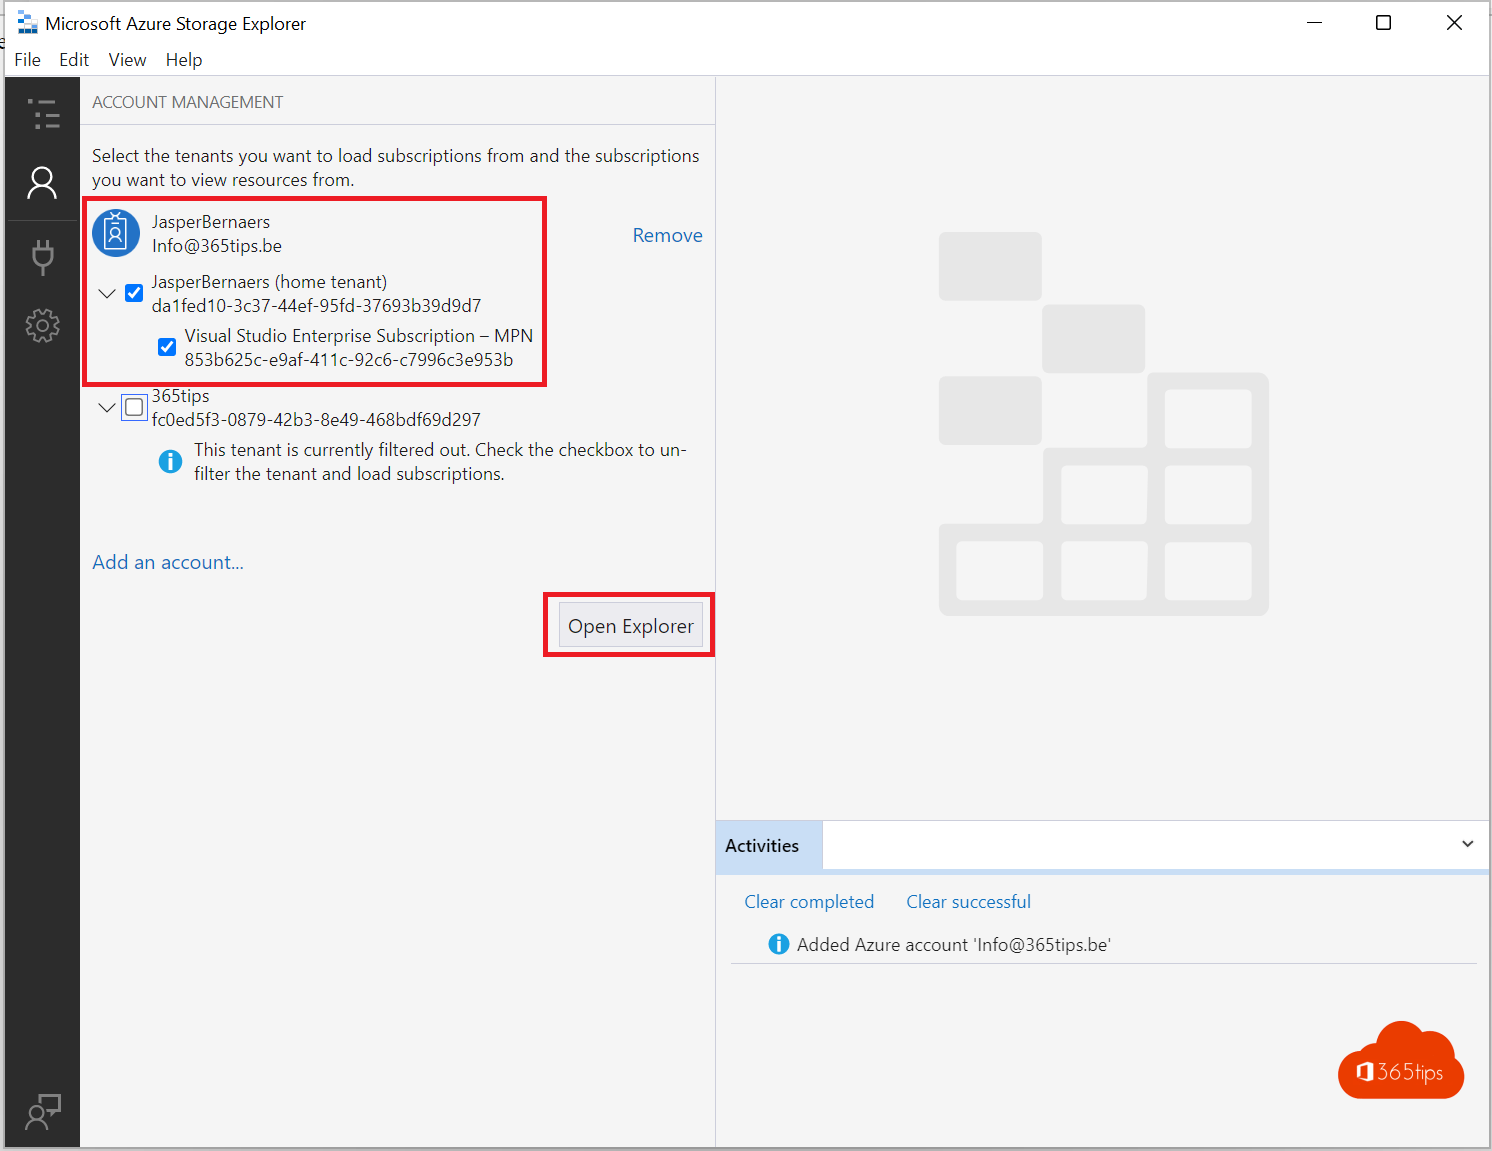 Tutorial: How to download Microsoft Azure storage explorer?